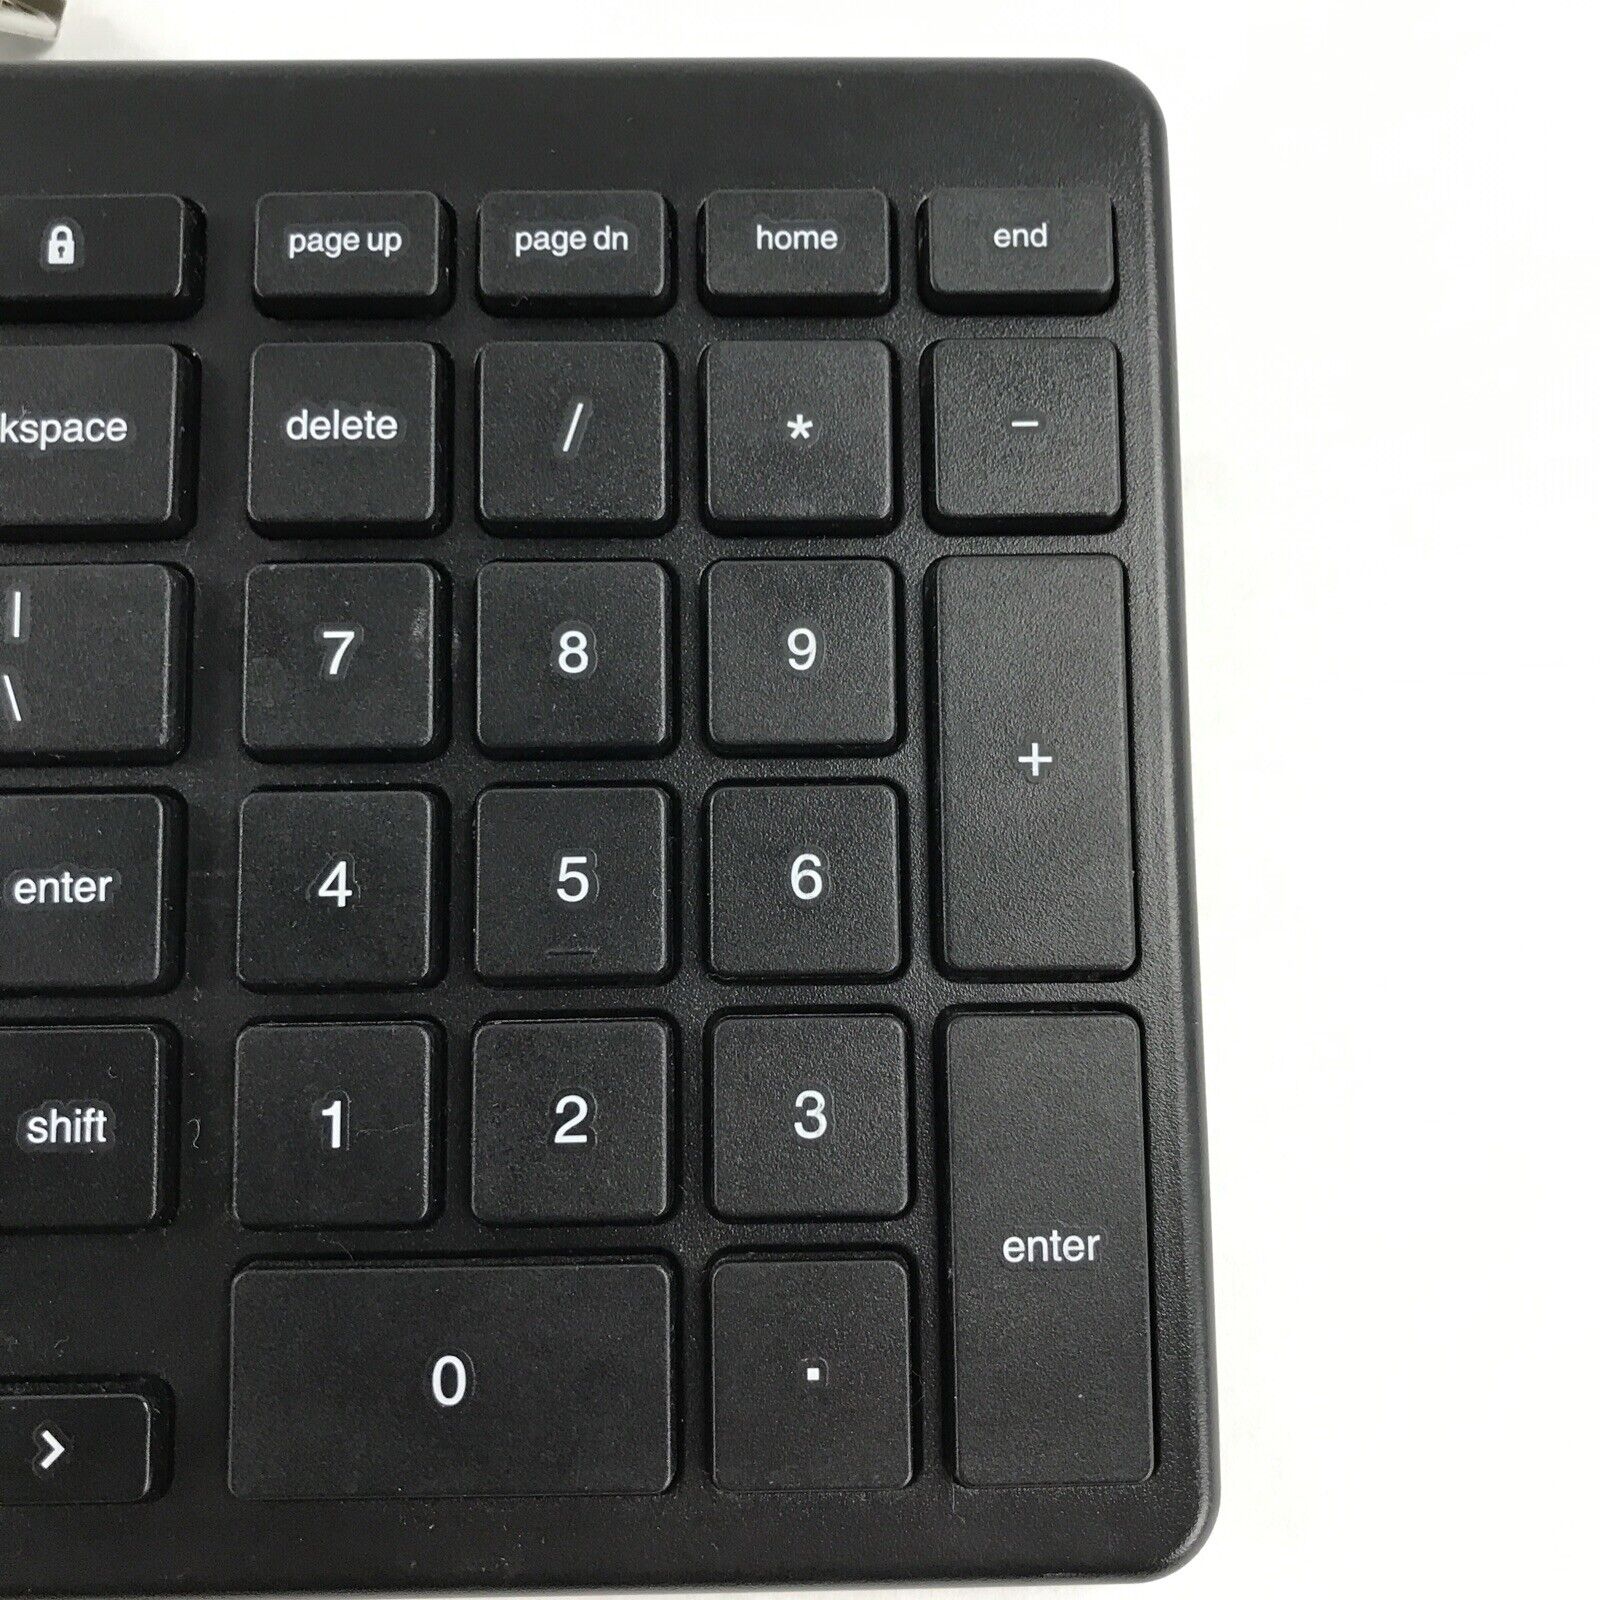 Logitech SK-6822 Black USB Wired Keyboard AEW73569811